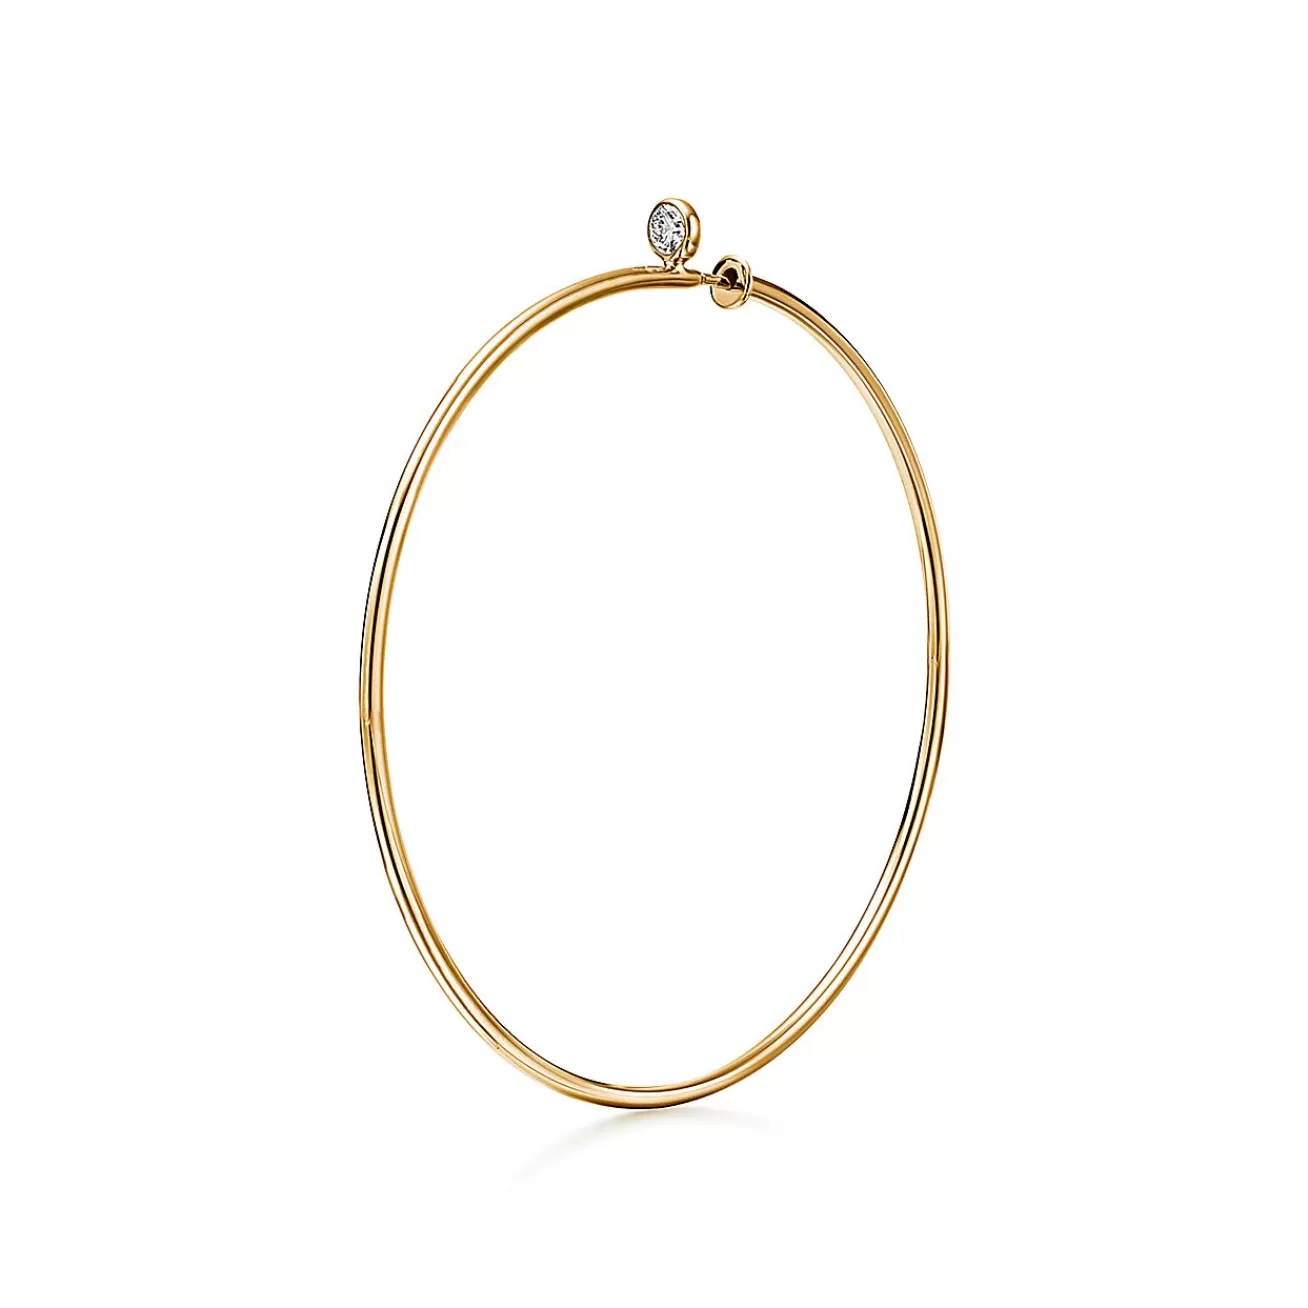 Tiffany & Co. Elsa Peretti® Diamond Hoop earrings in 18k gold with diamonds, medium. | ^ Earrings | Gifts for Her